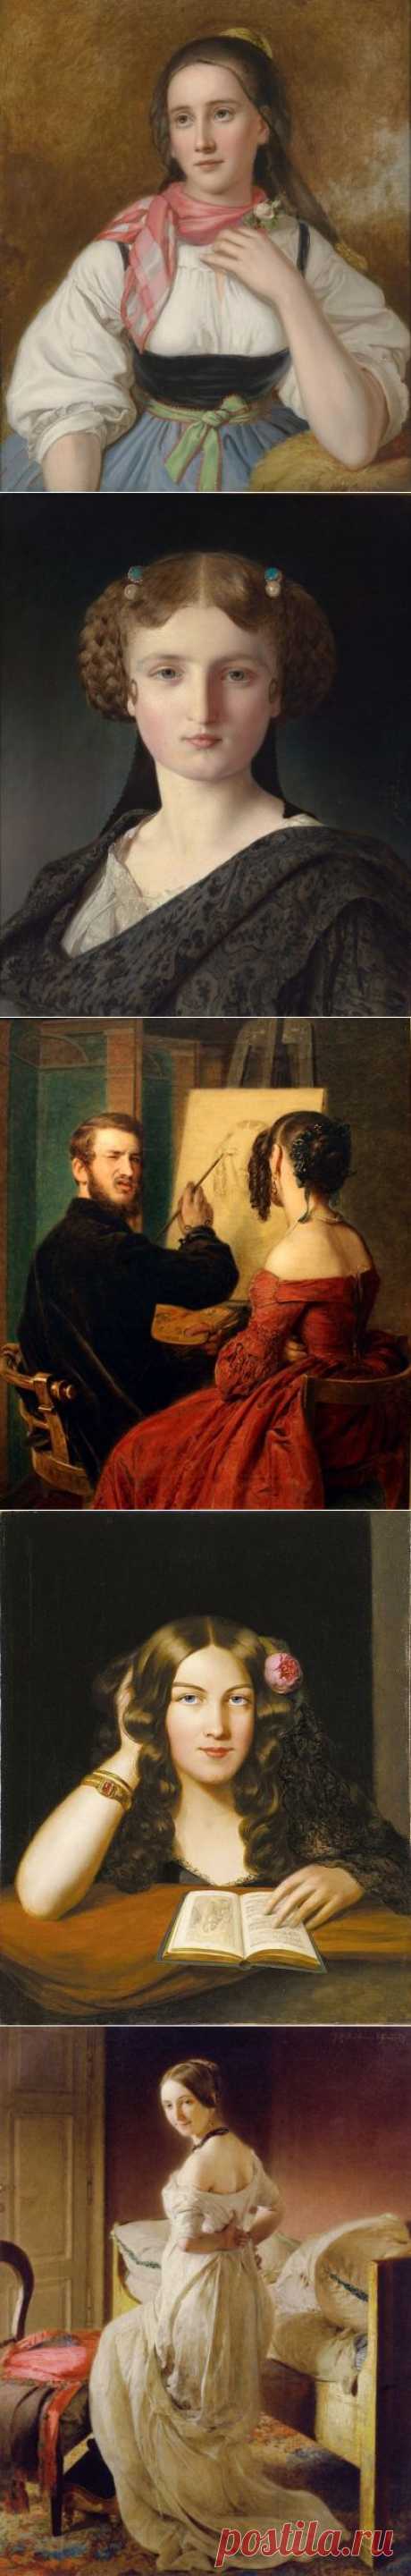 Австрийский художник бидермейер Johann Baptist Reiter (1813 - 1890)... ЖанровоПортретное.